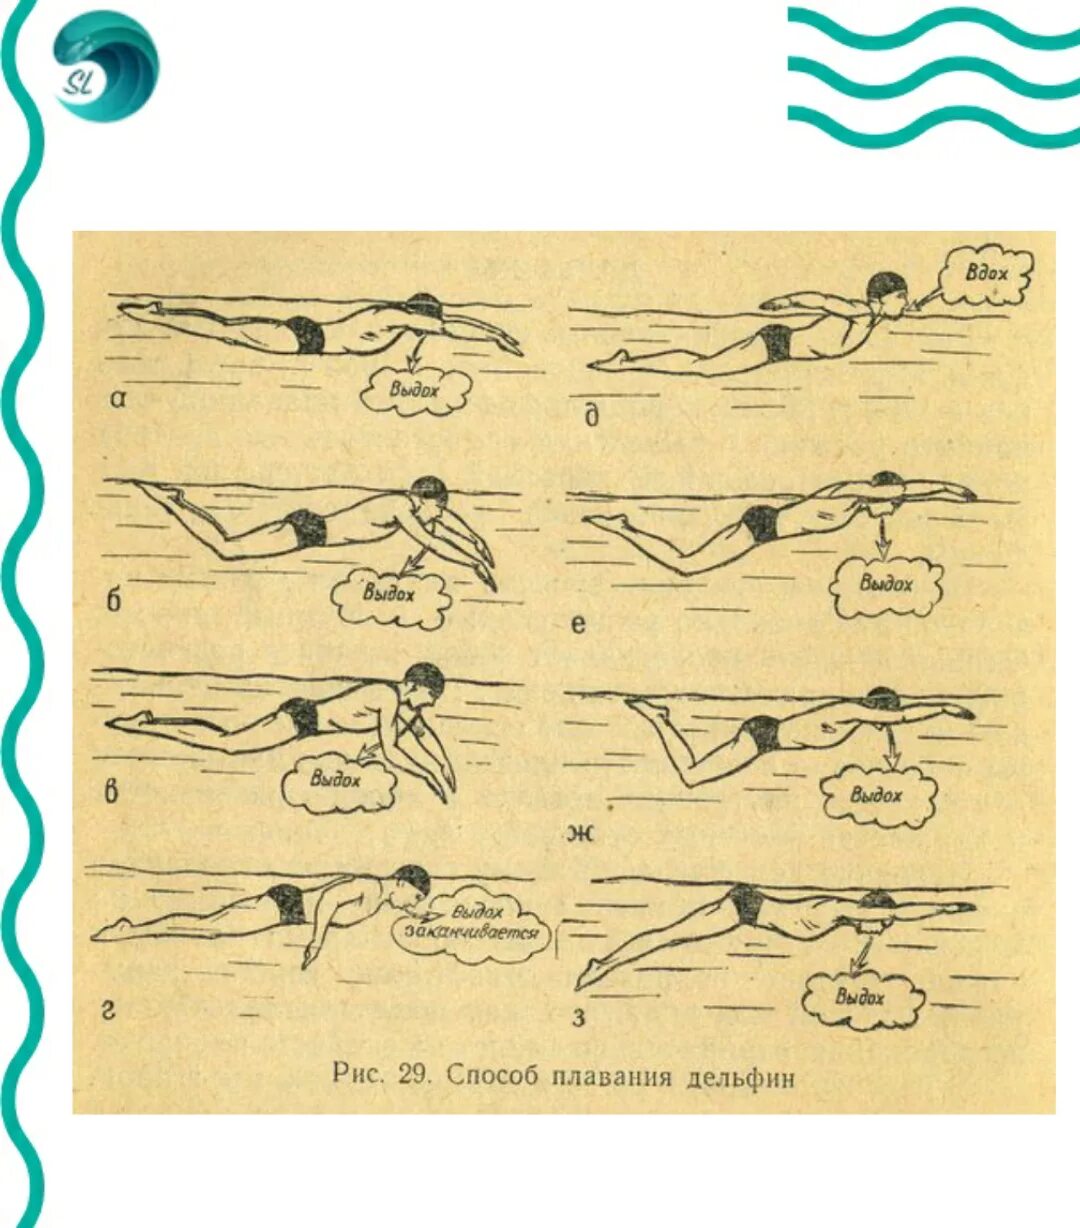 Техники плавания Баттерфляй. Стиль плавания Баттерфляй техника. Техника плавания: стиль Баттерфляй (Дельфин). Техники плавания брасс Кроль Баттерфляй. Плавание брассом для начинающих видео